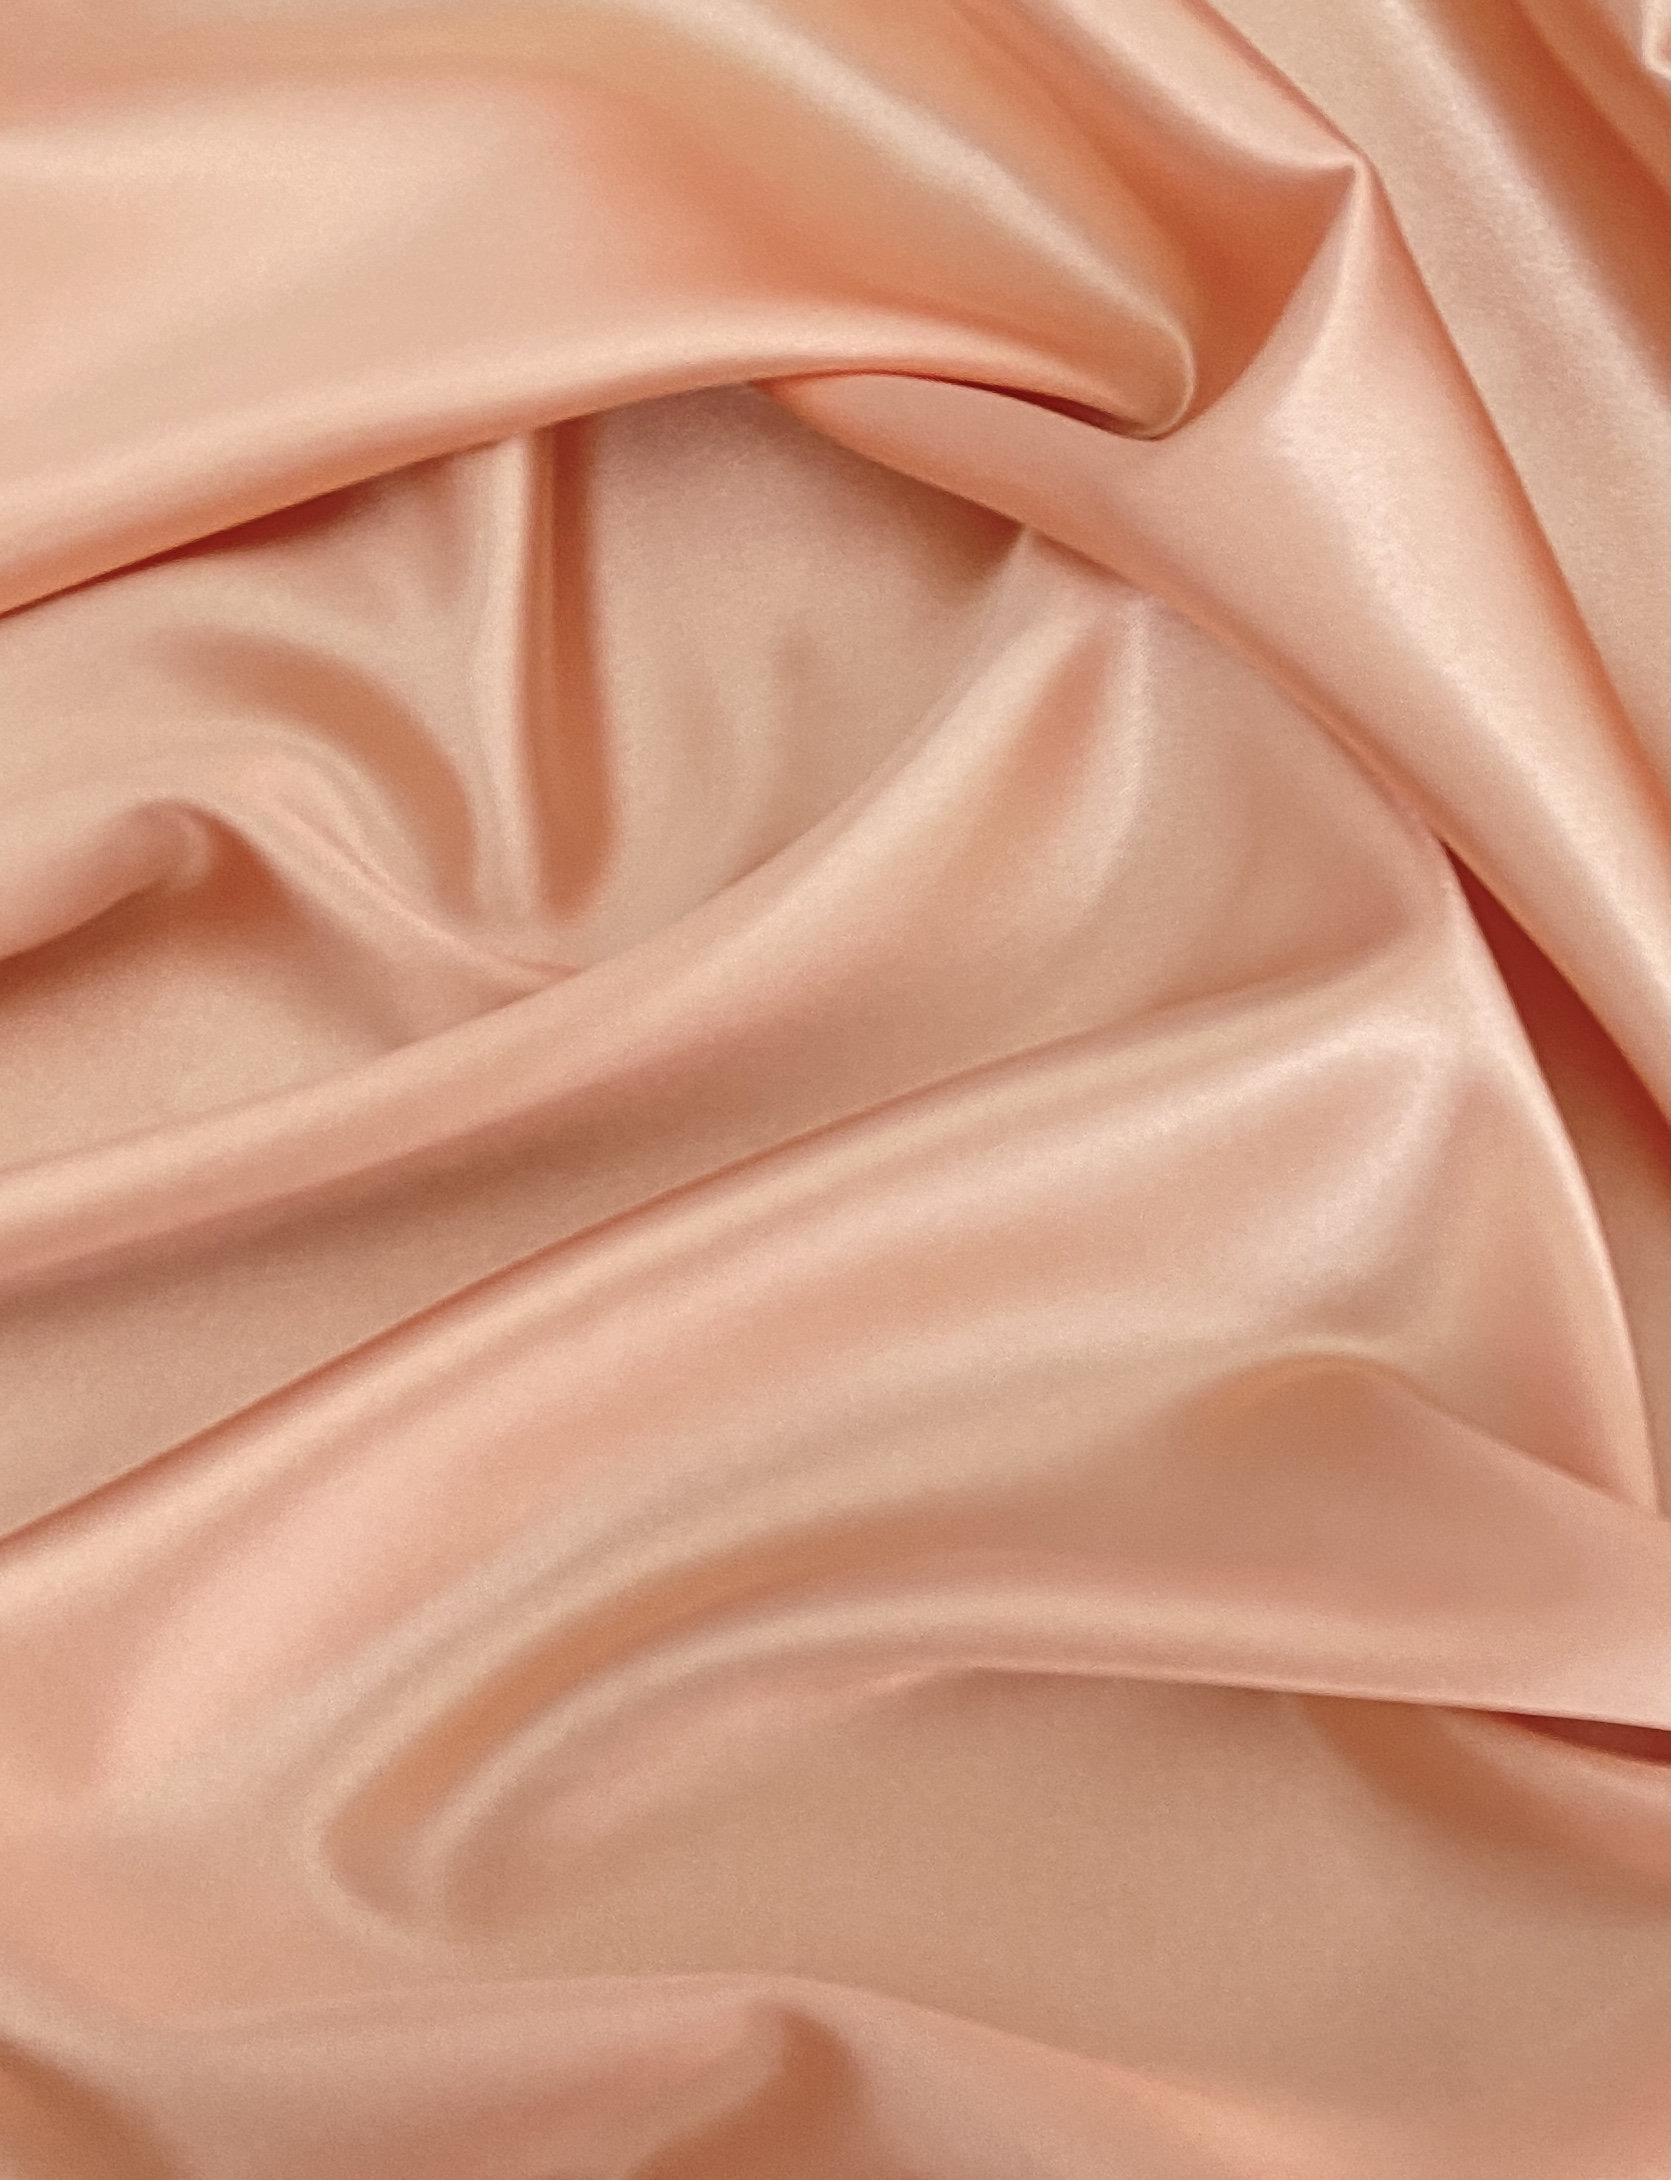 Baby Pink Satin Fabric Premium Quality Pink Satin Fabric Medium